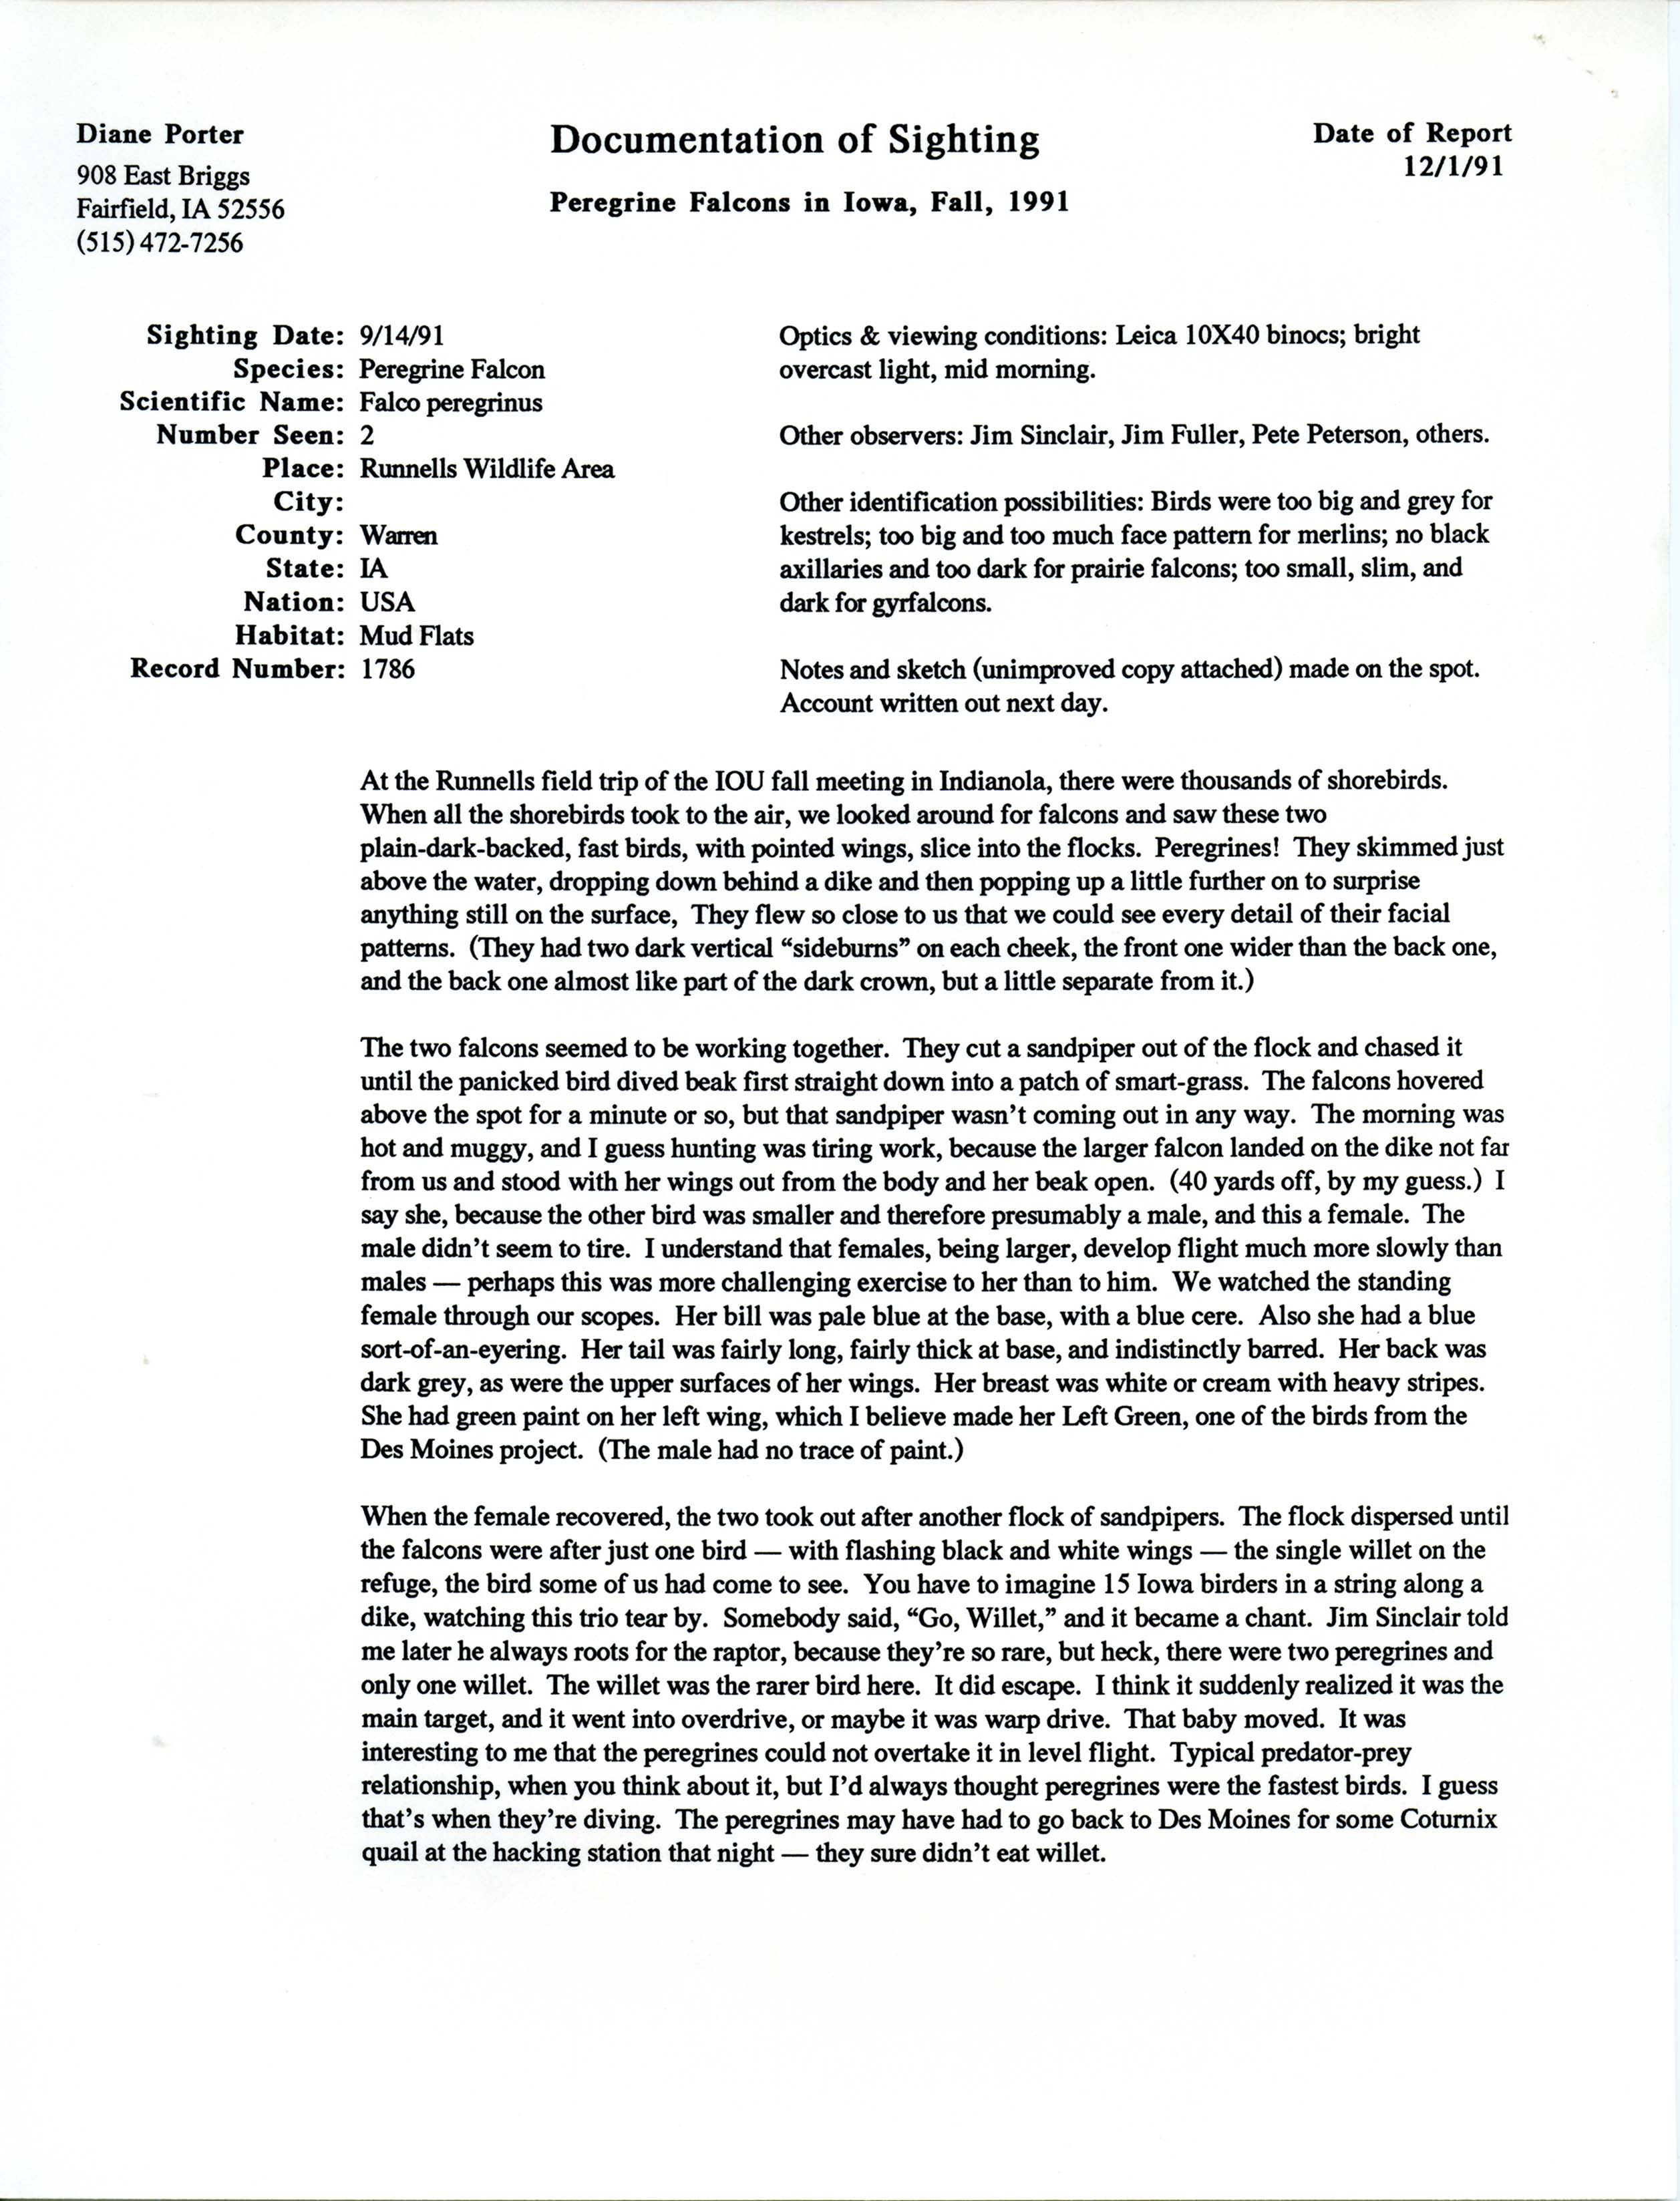 Rare bird documentation form for Peregrine Falcon at Runnells Wildlife Area, 1991